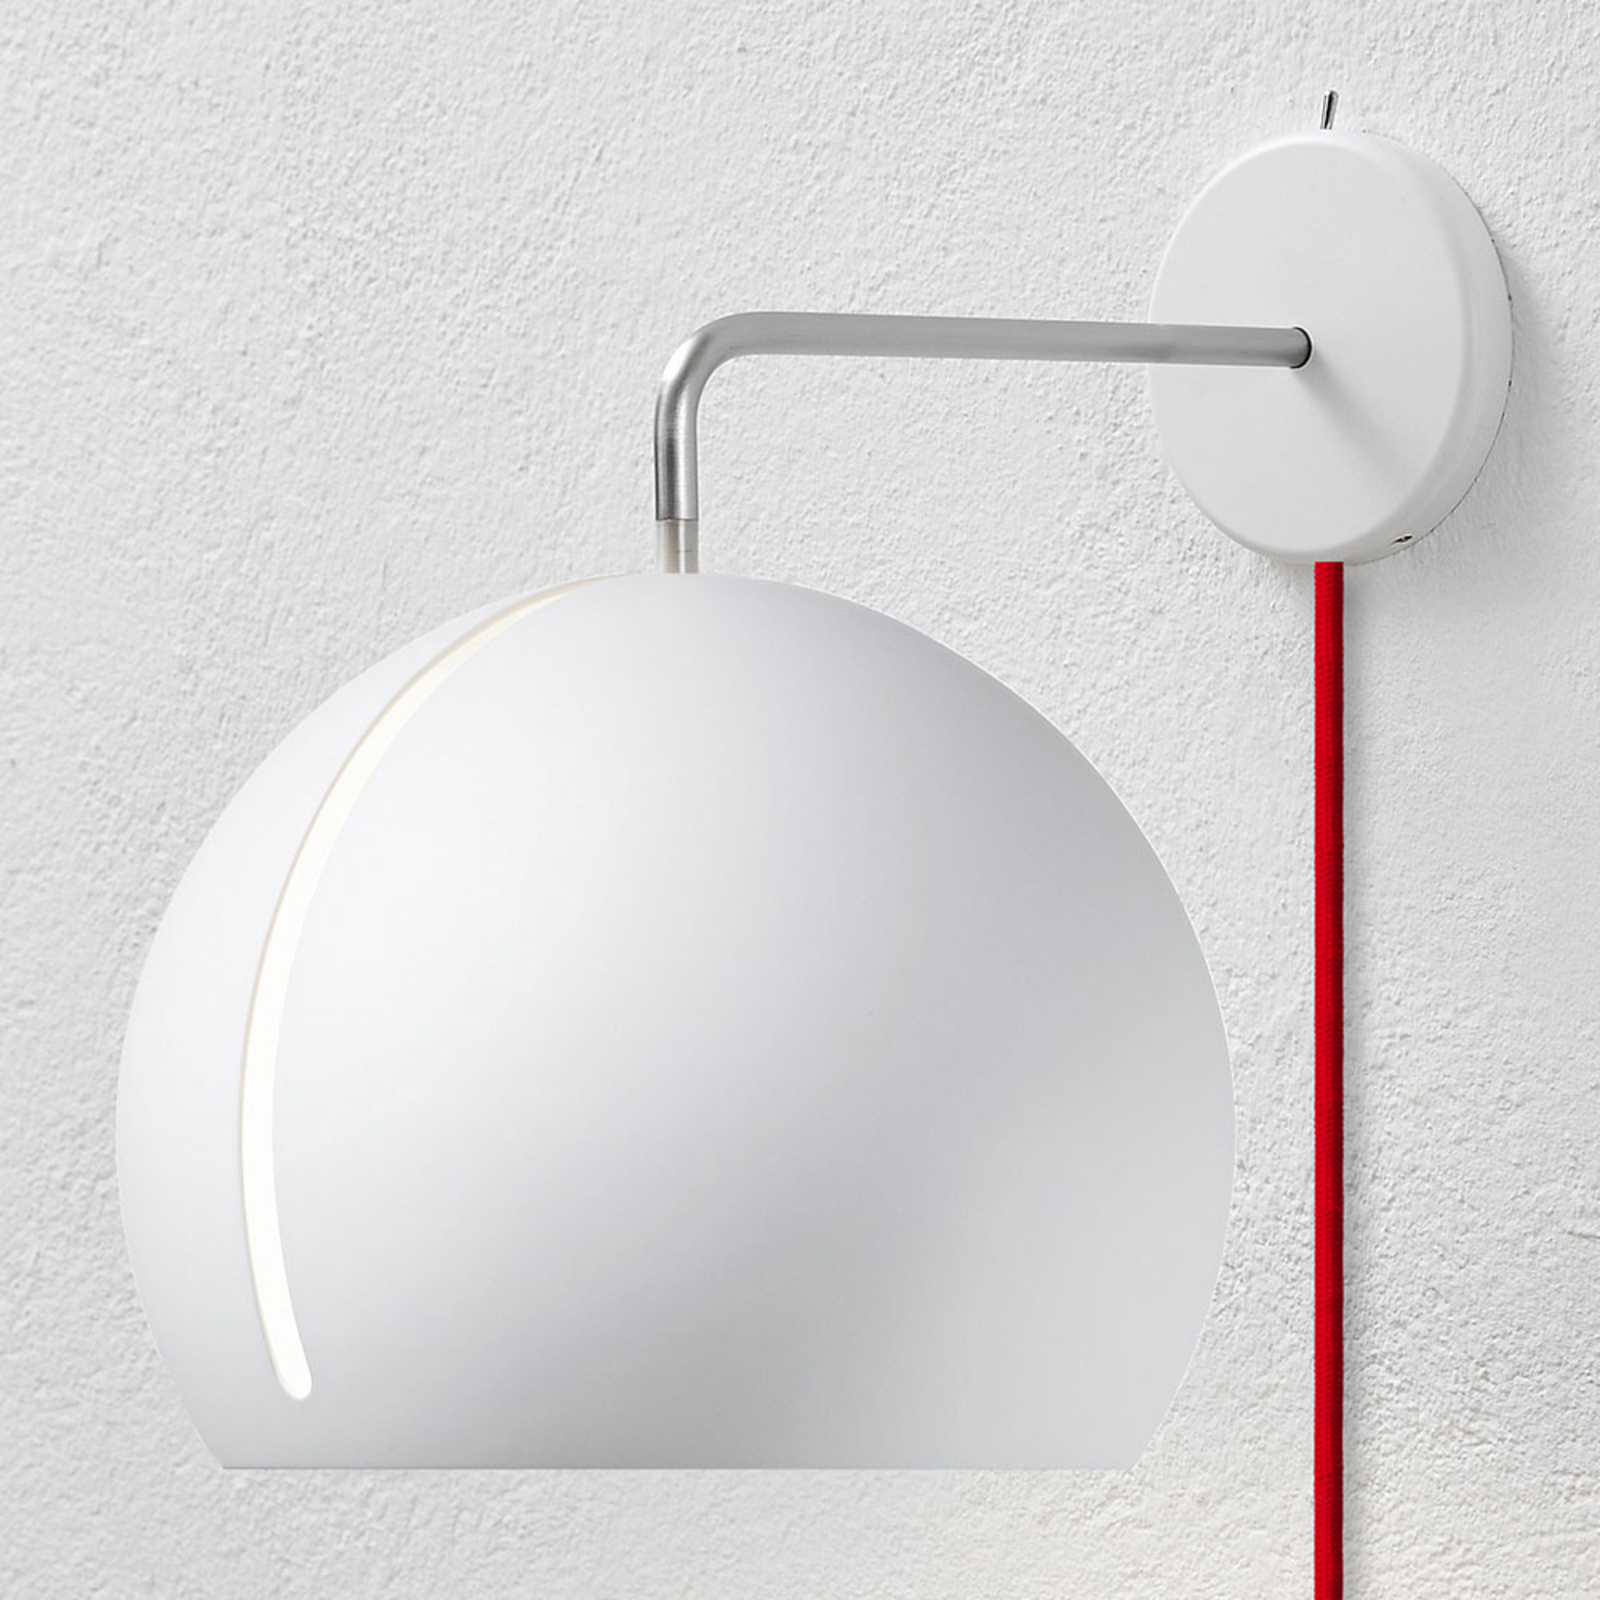 Nyta Tilt Globe Wall wandlamp kabel rood, wit